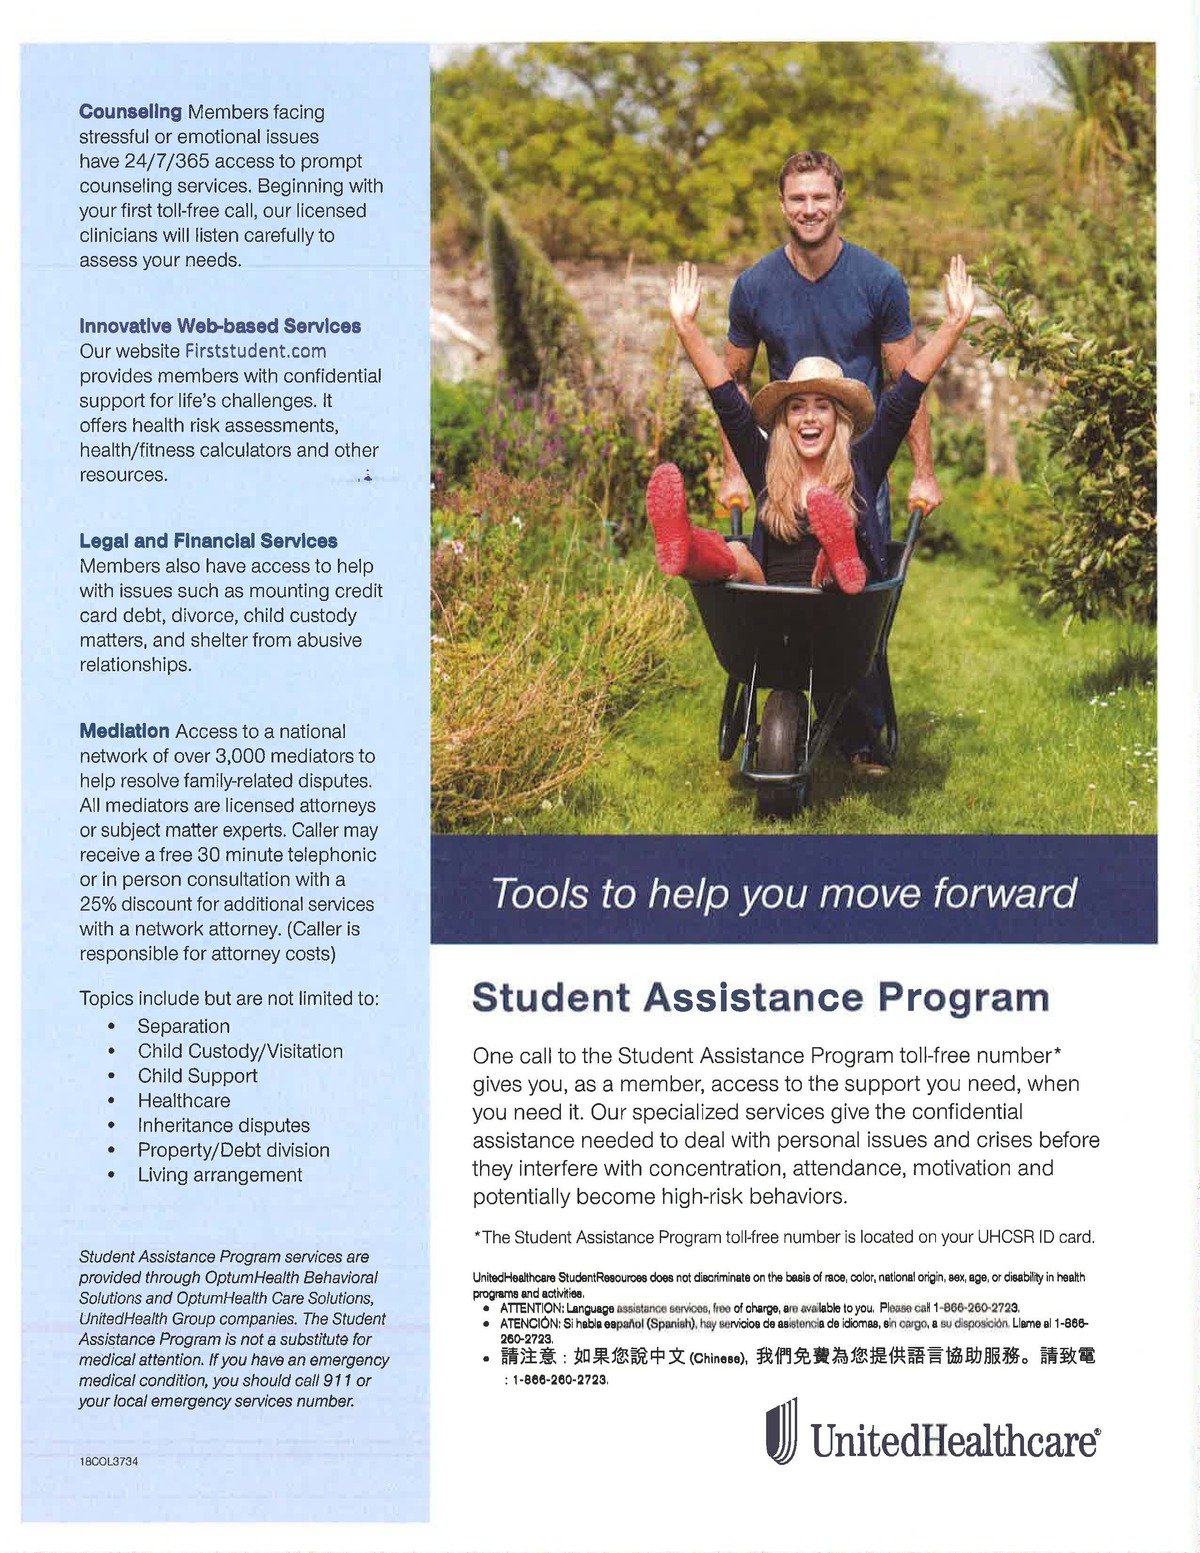 Student Assistance Program Flyer